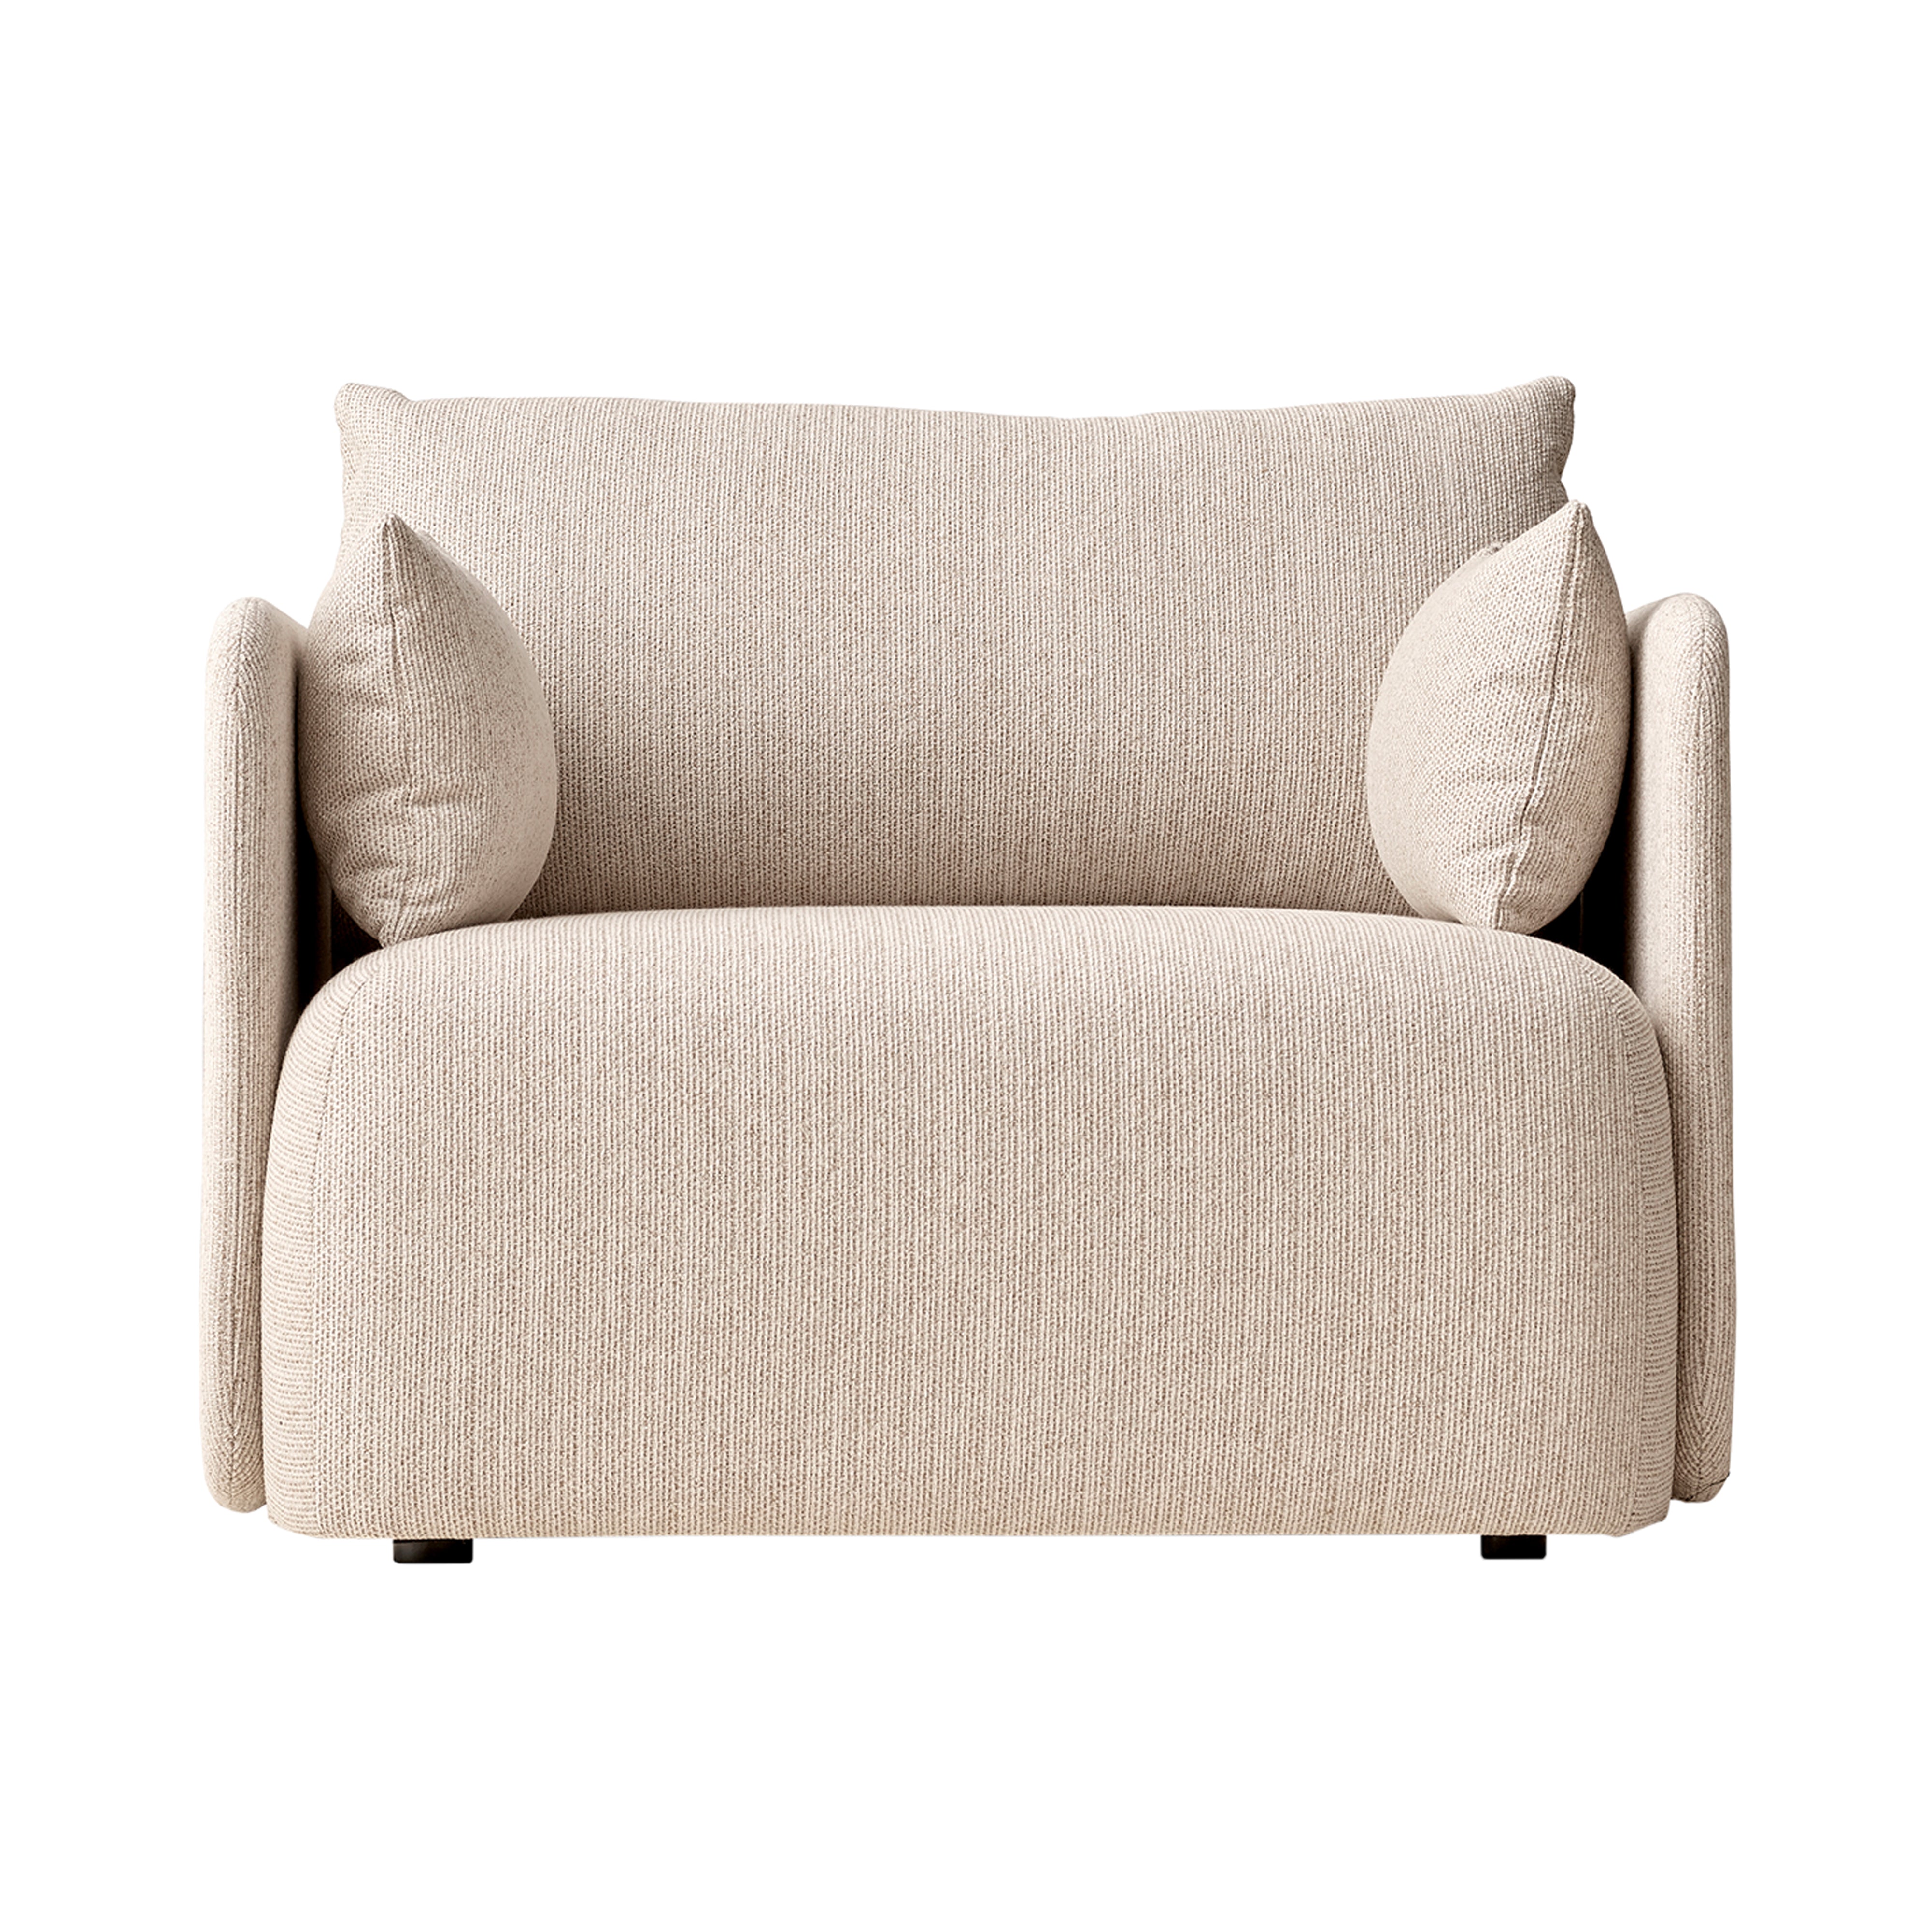 Offset Sofa: 1 Seater + Savanna 202